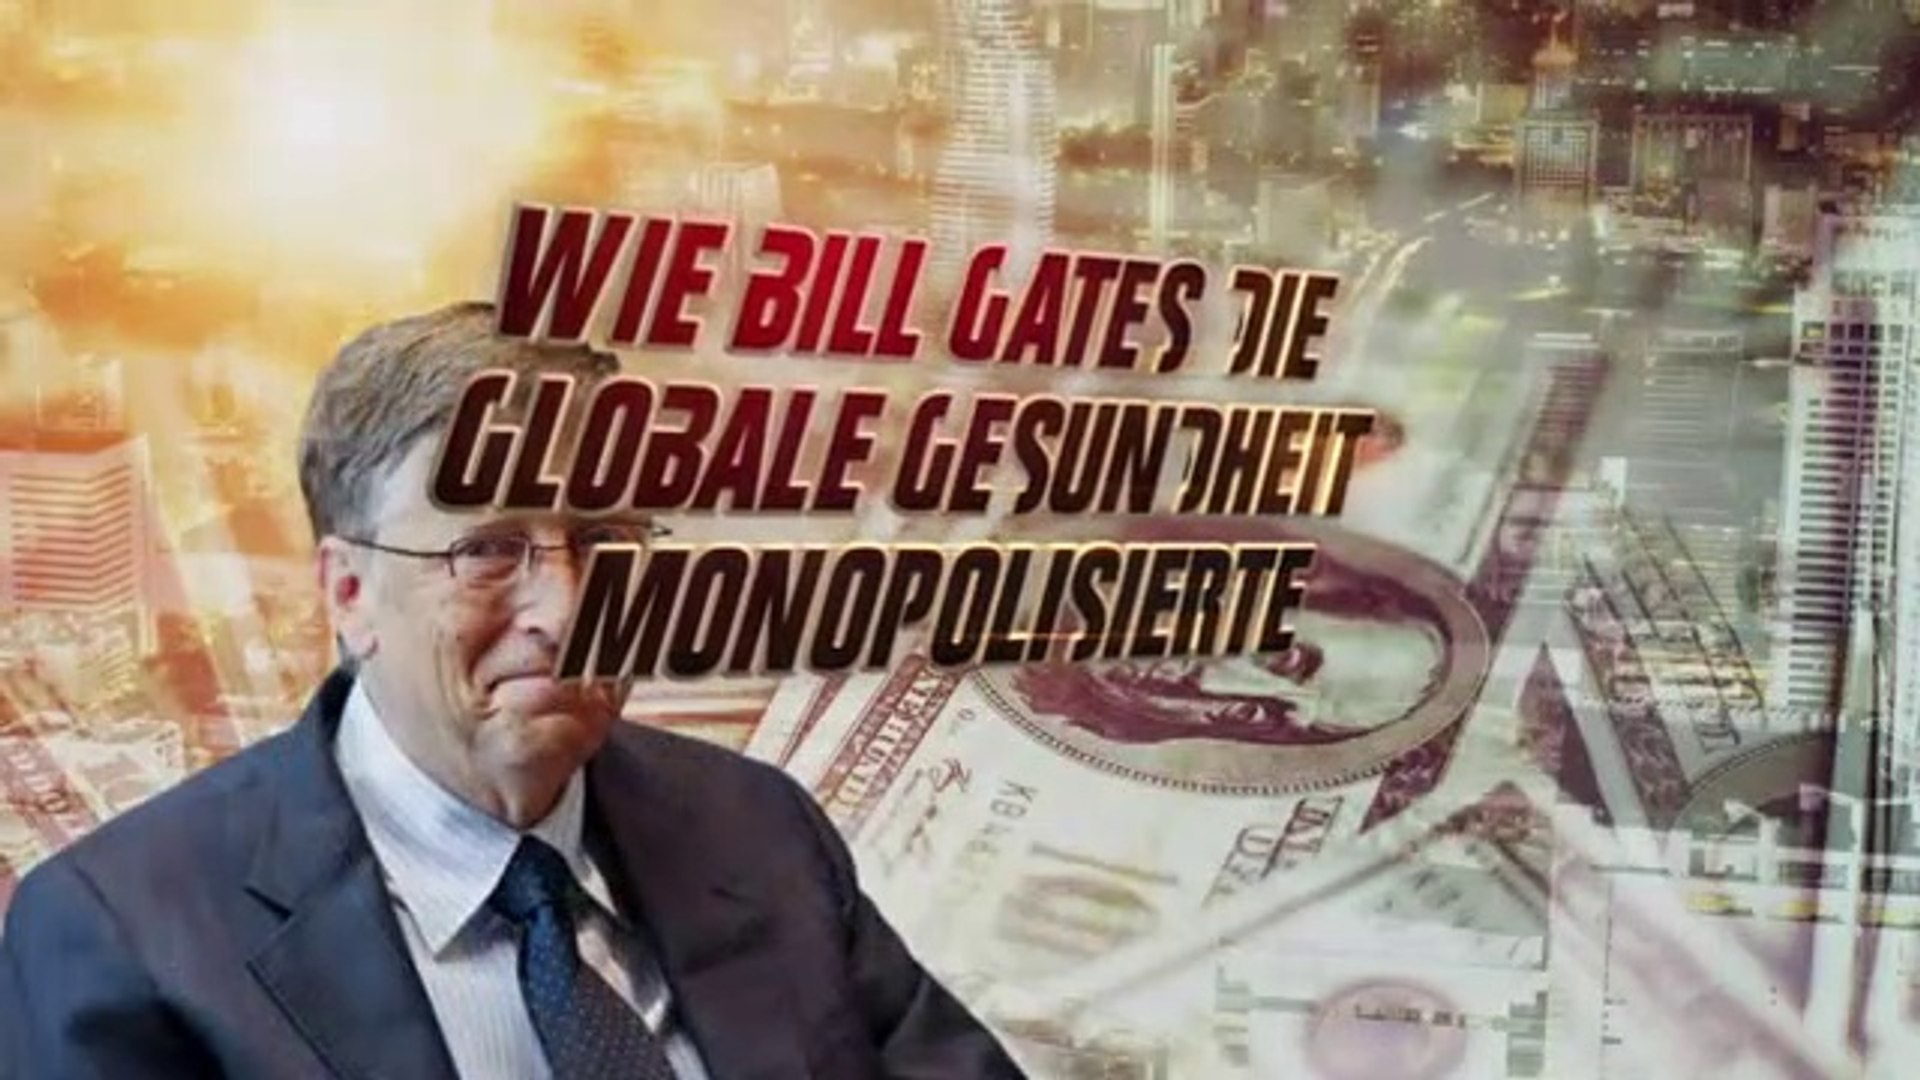 ⁣Wie Bill Gates die globale Gesundheit monopolisierte